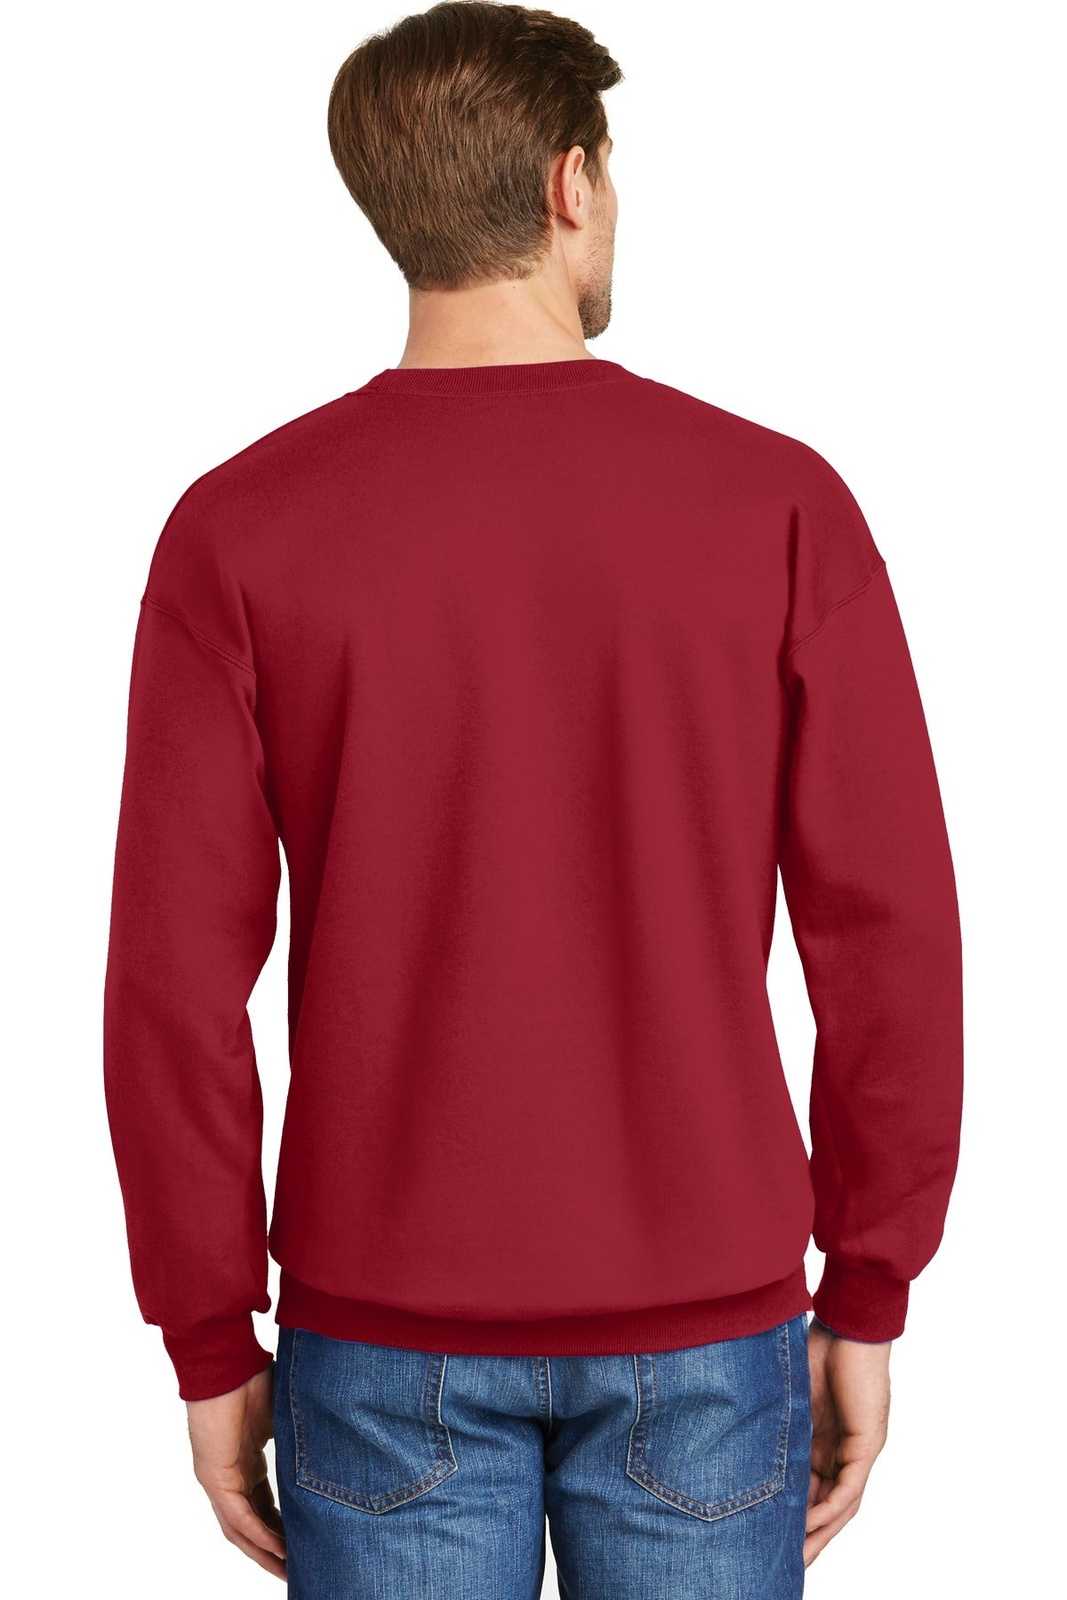 Hanes F260 Ultimate Cotton Crewneck Sweatshirt - Deep Red - HIT a Double